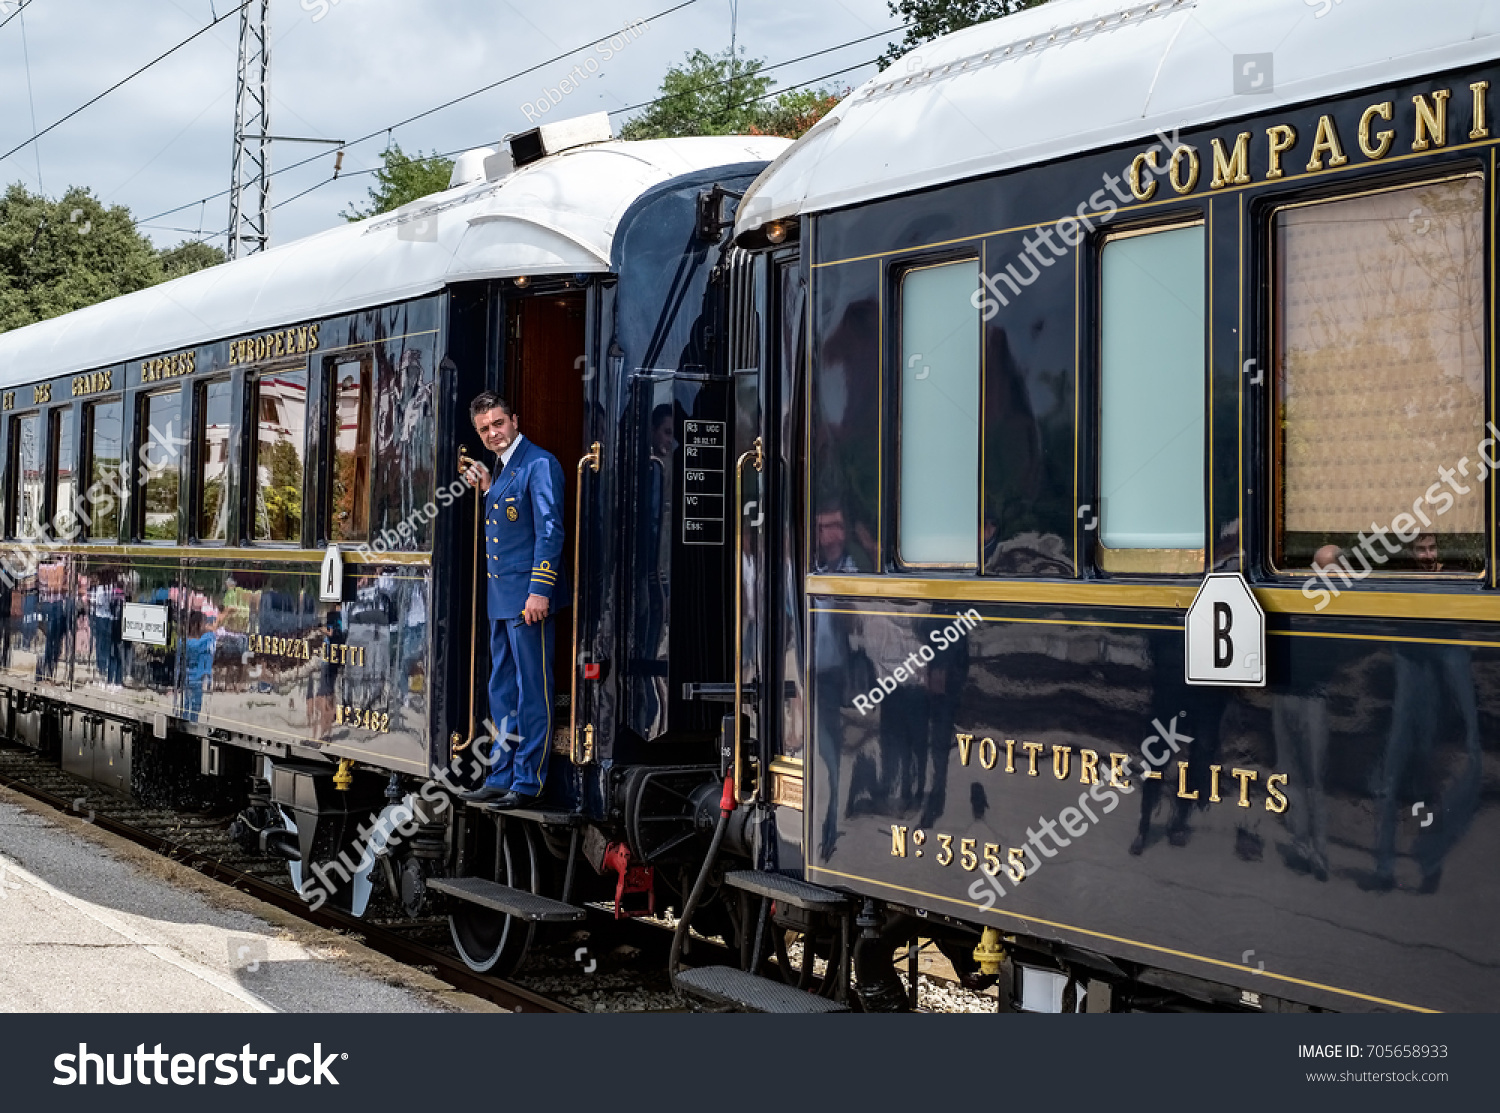 5,242 Royal train Images, Stock Photos  Vectors | Shutterstock